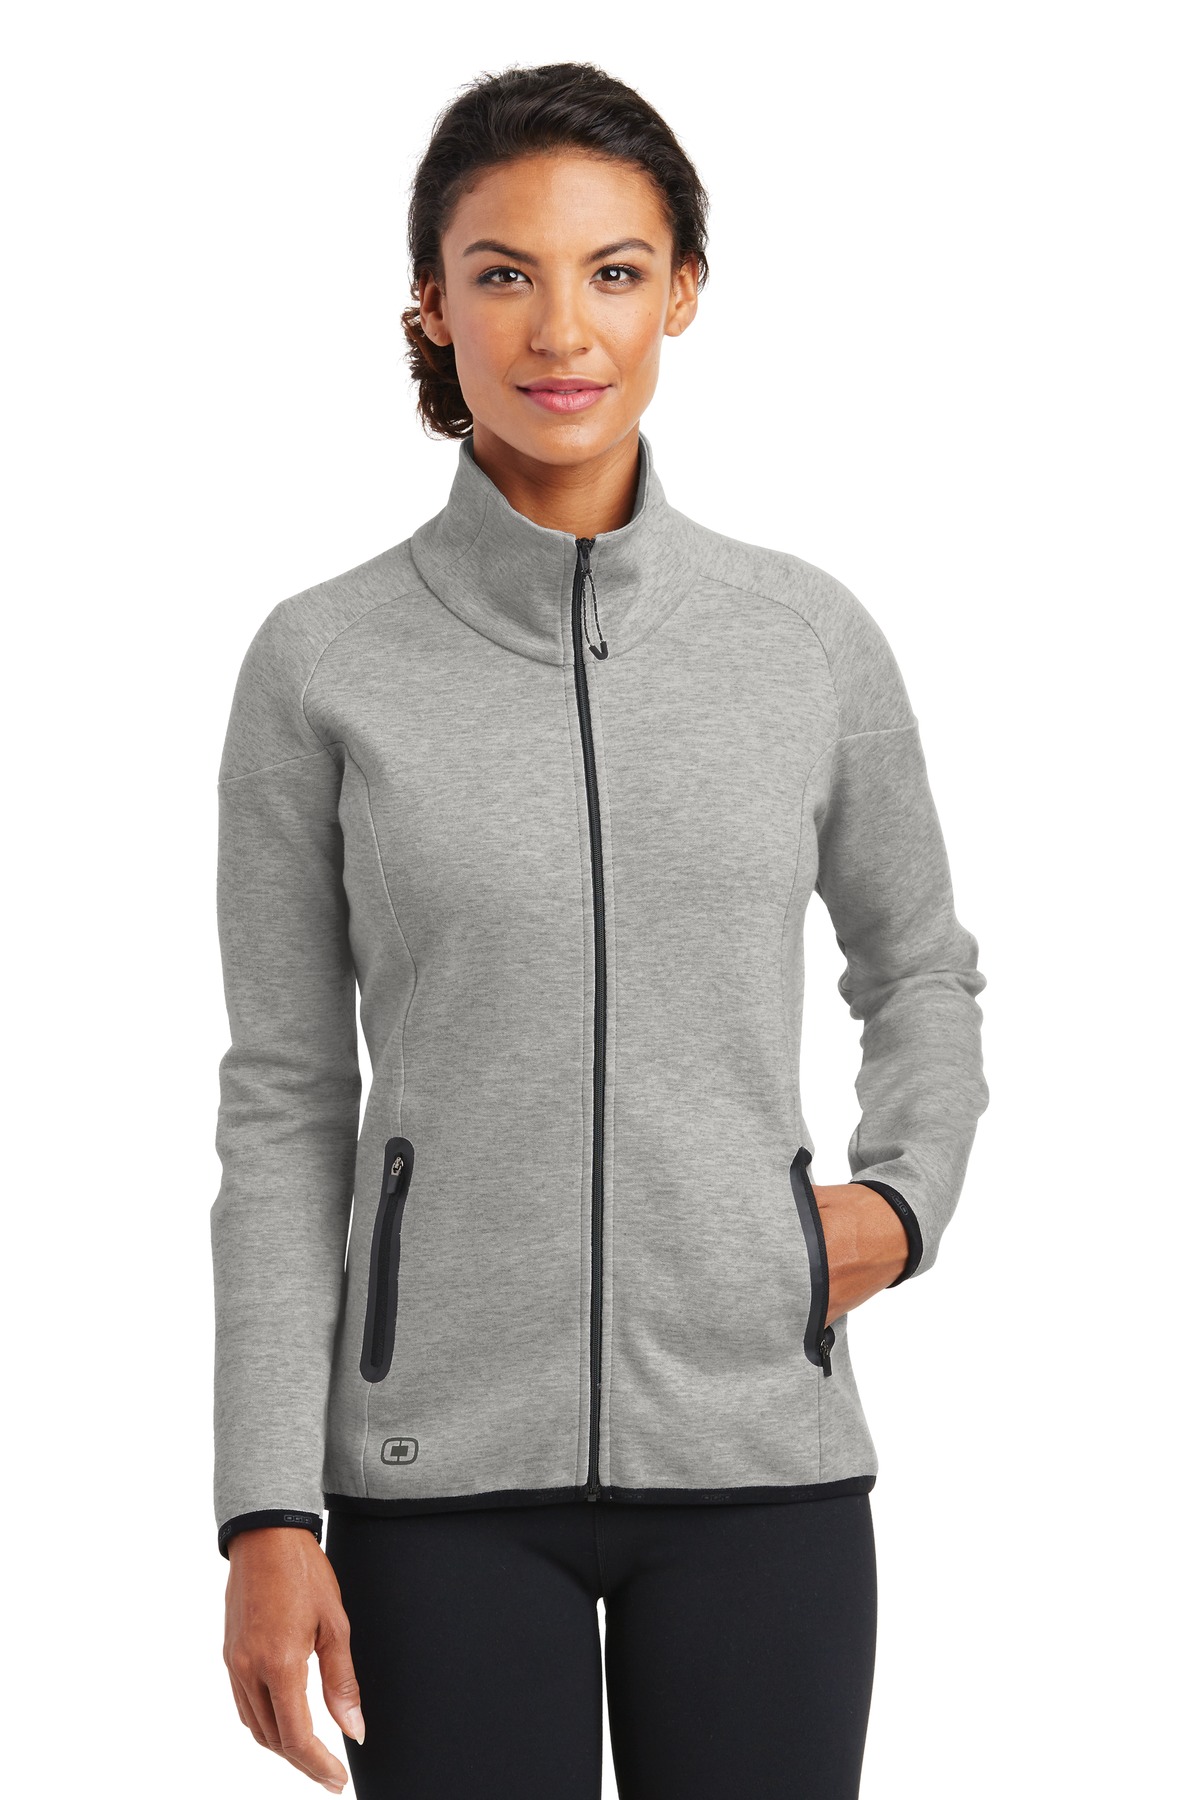 OGIO Ladies Sweatshirts&Fleece Hospitality Activewear ® ENDURANCE Ladies Origin Jacket.-OGIO